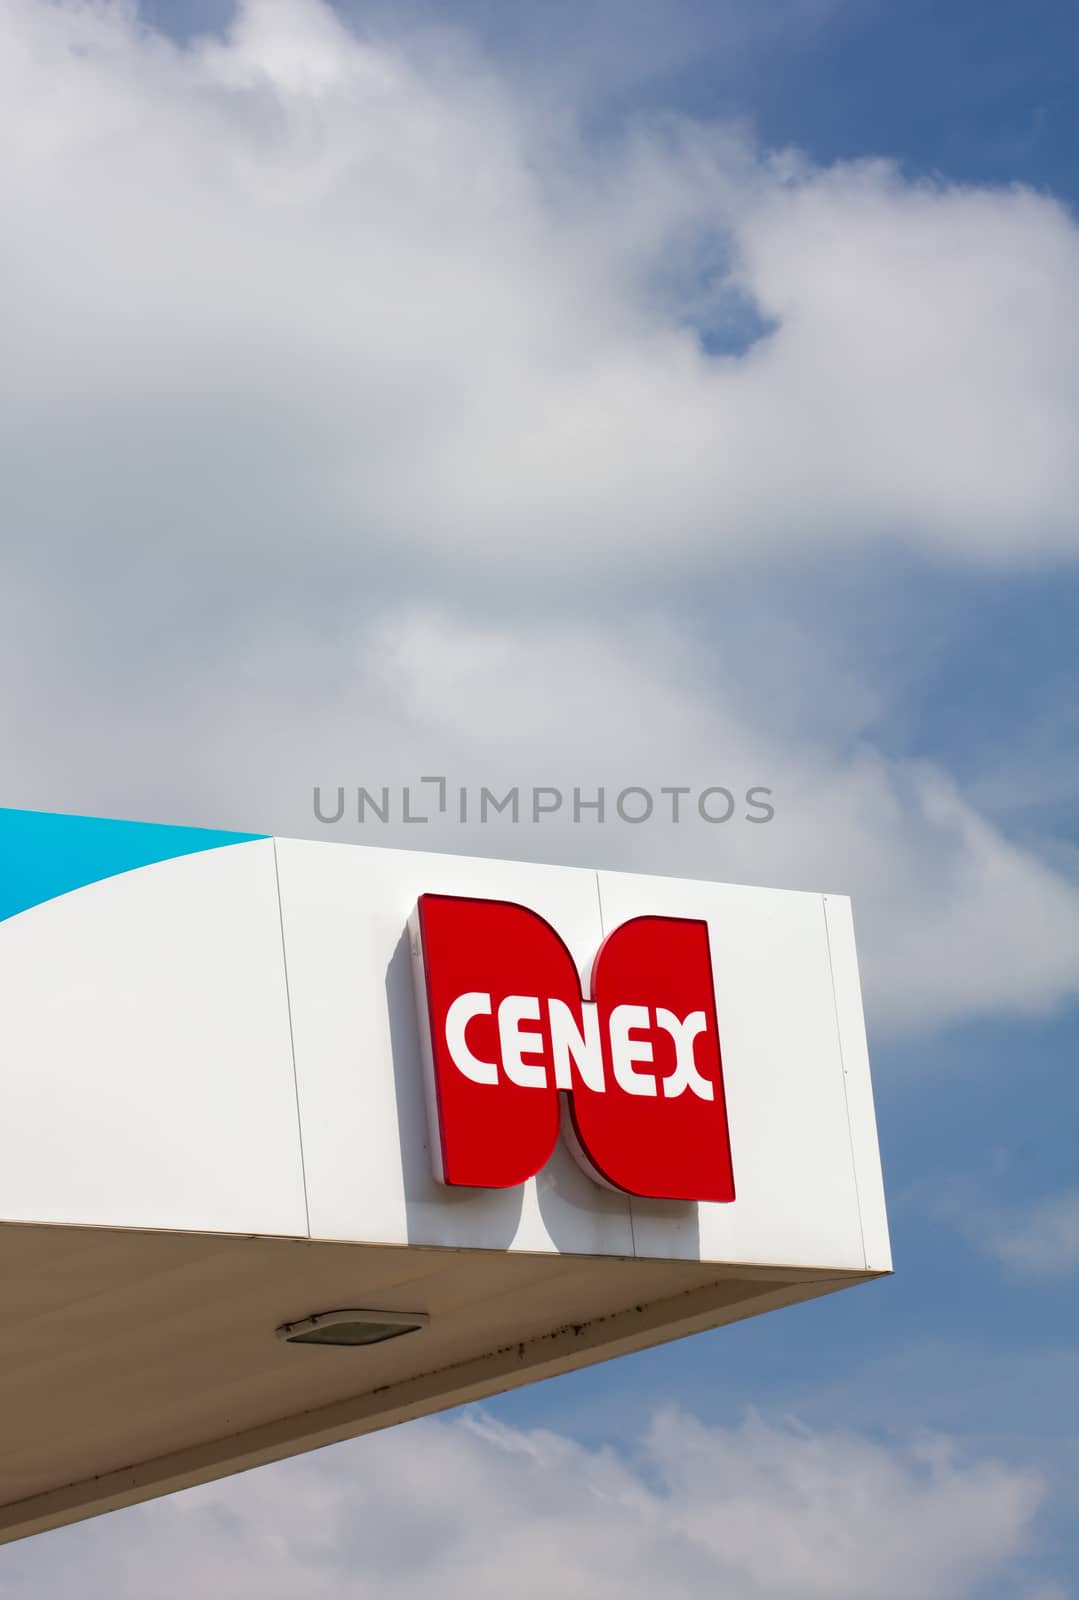 Cenex Gas Station Exterior by wolterk